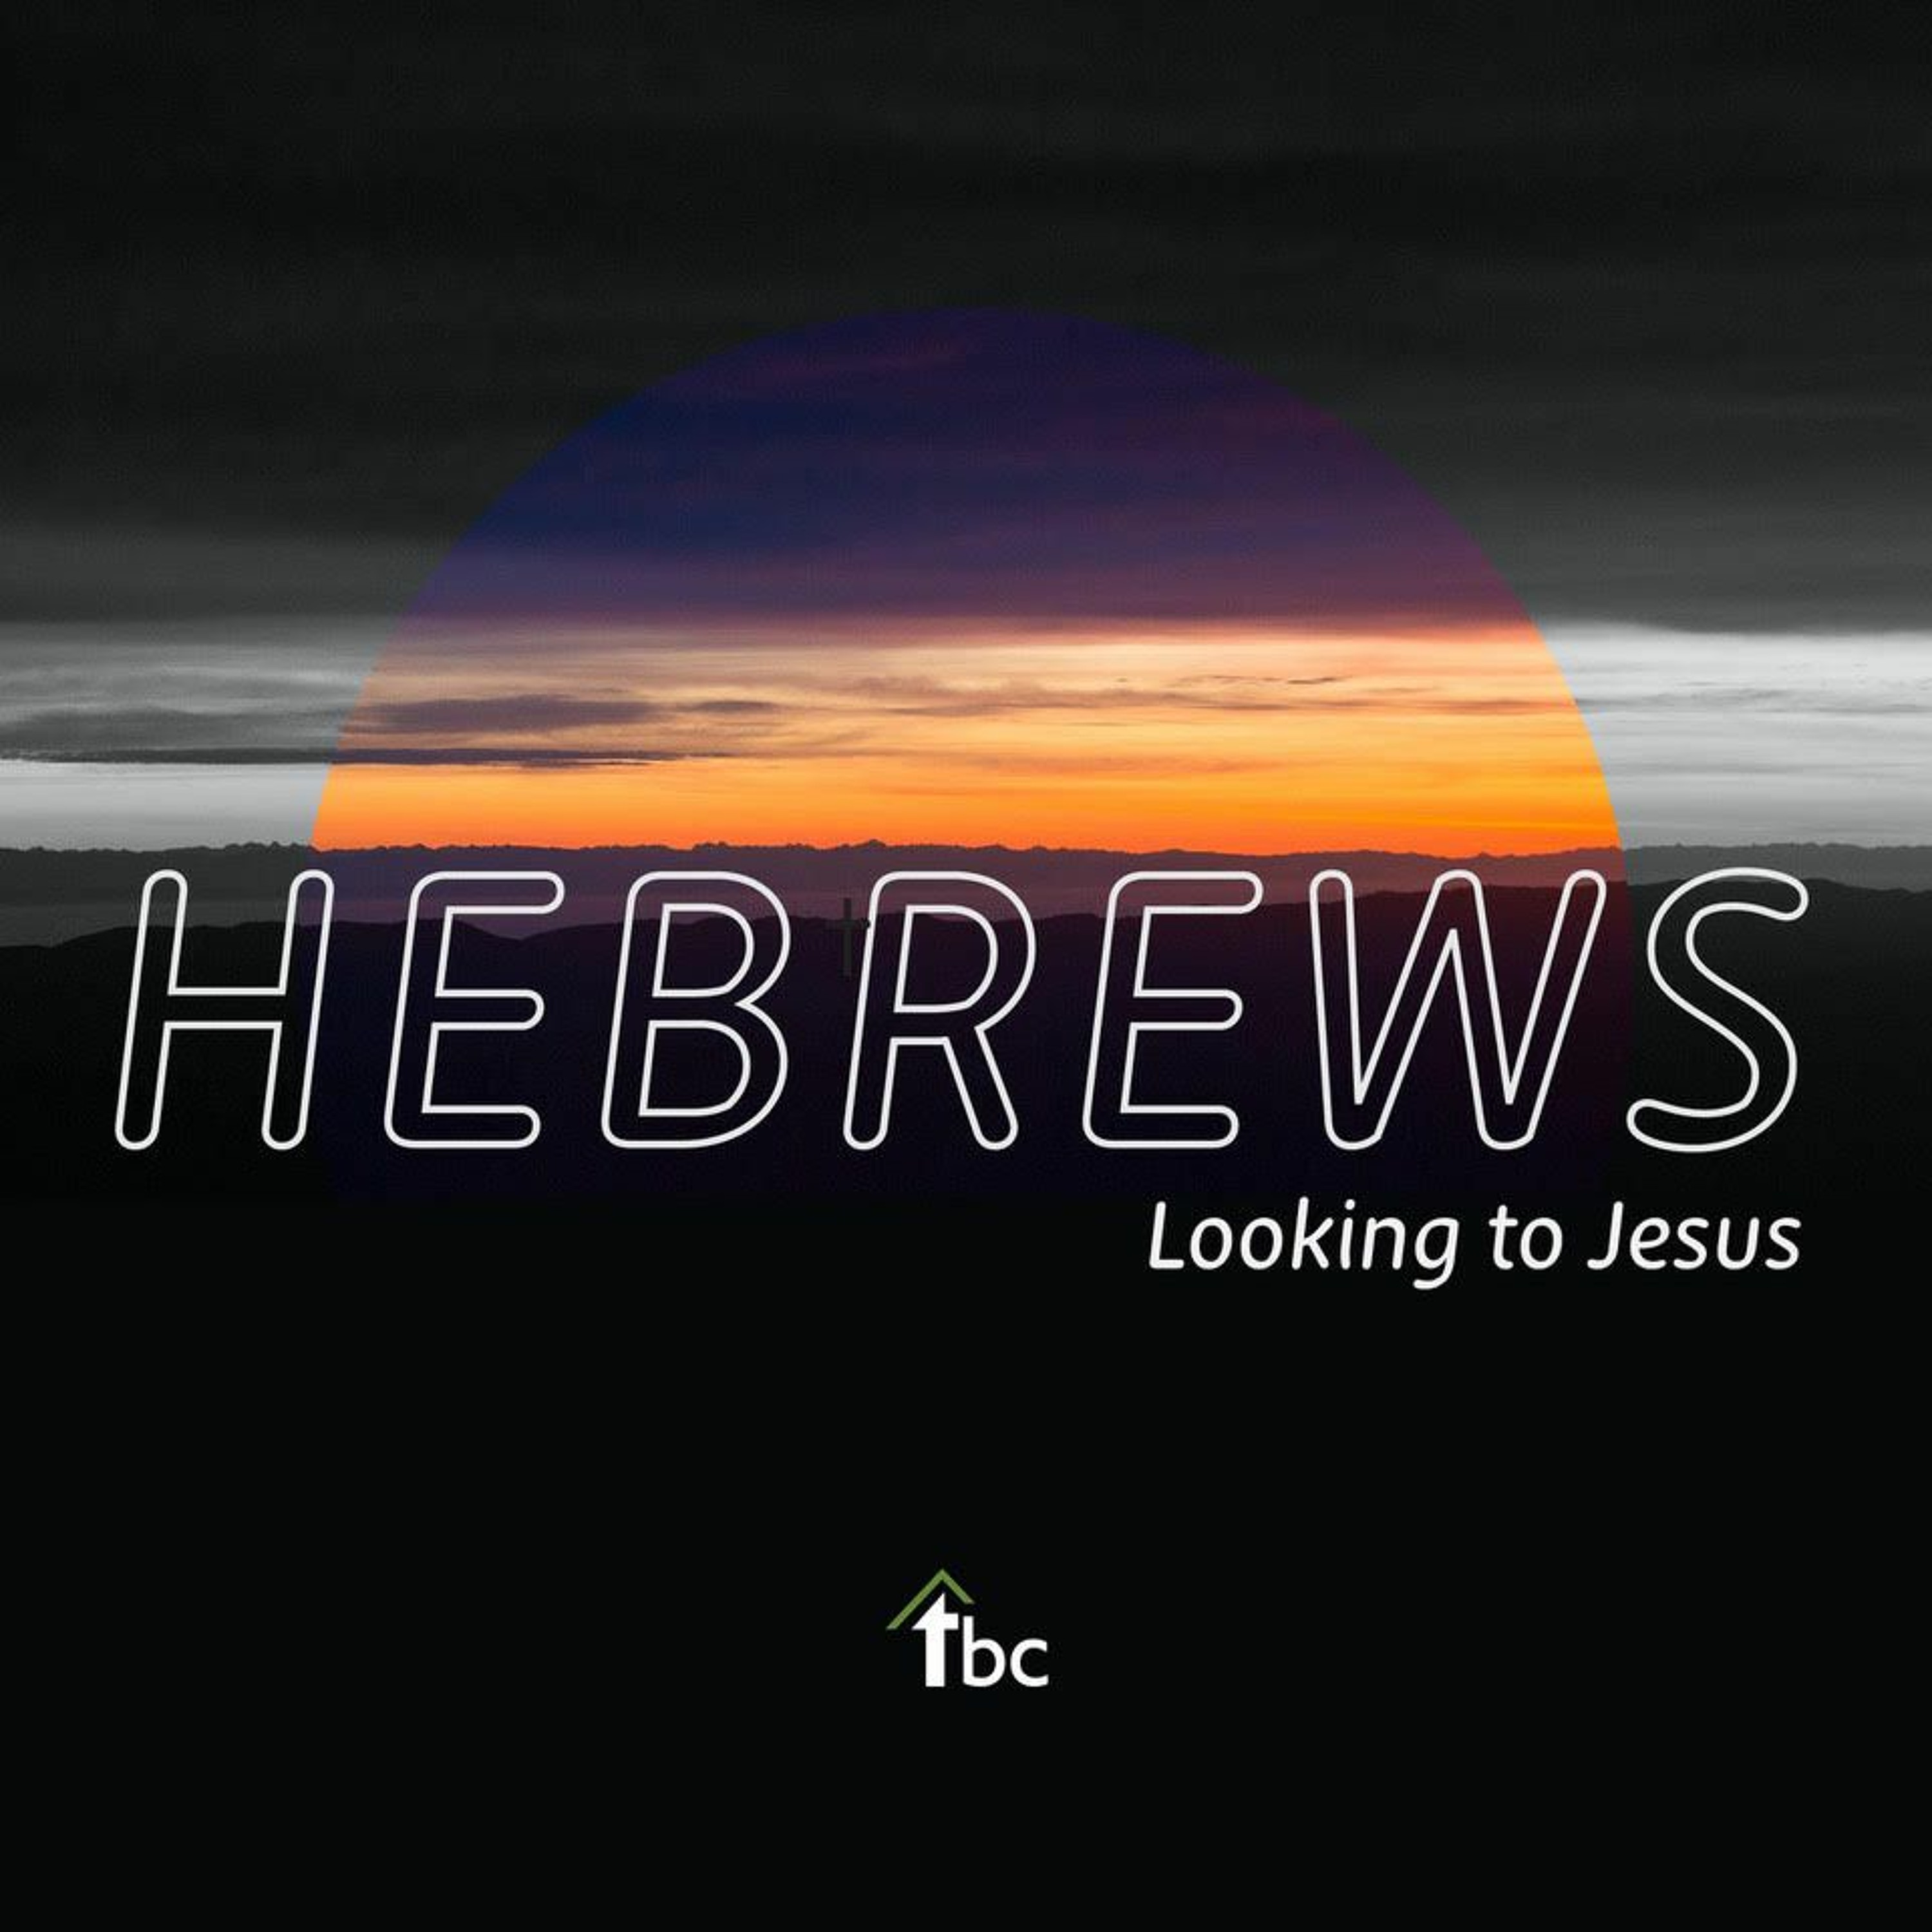 Contending For The Supremacy of Jesus (Hebrews 1:4-14)